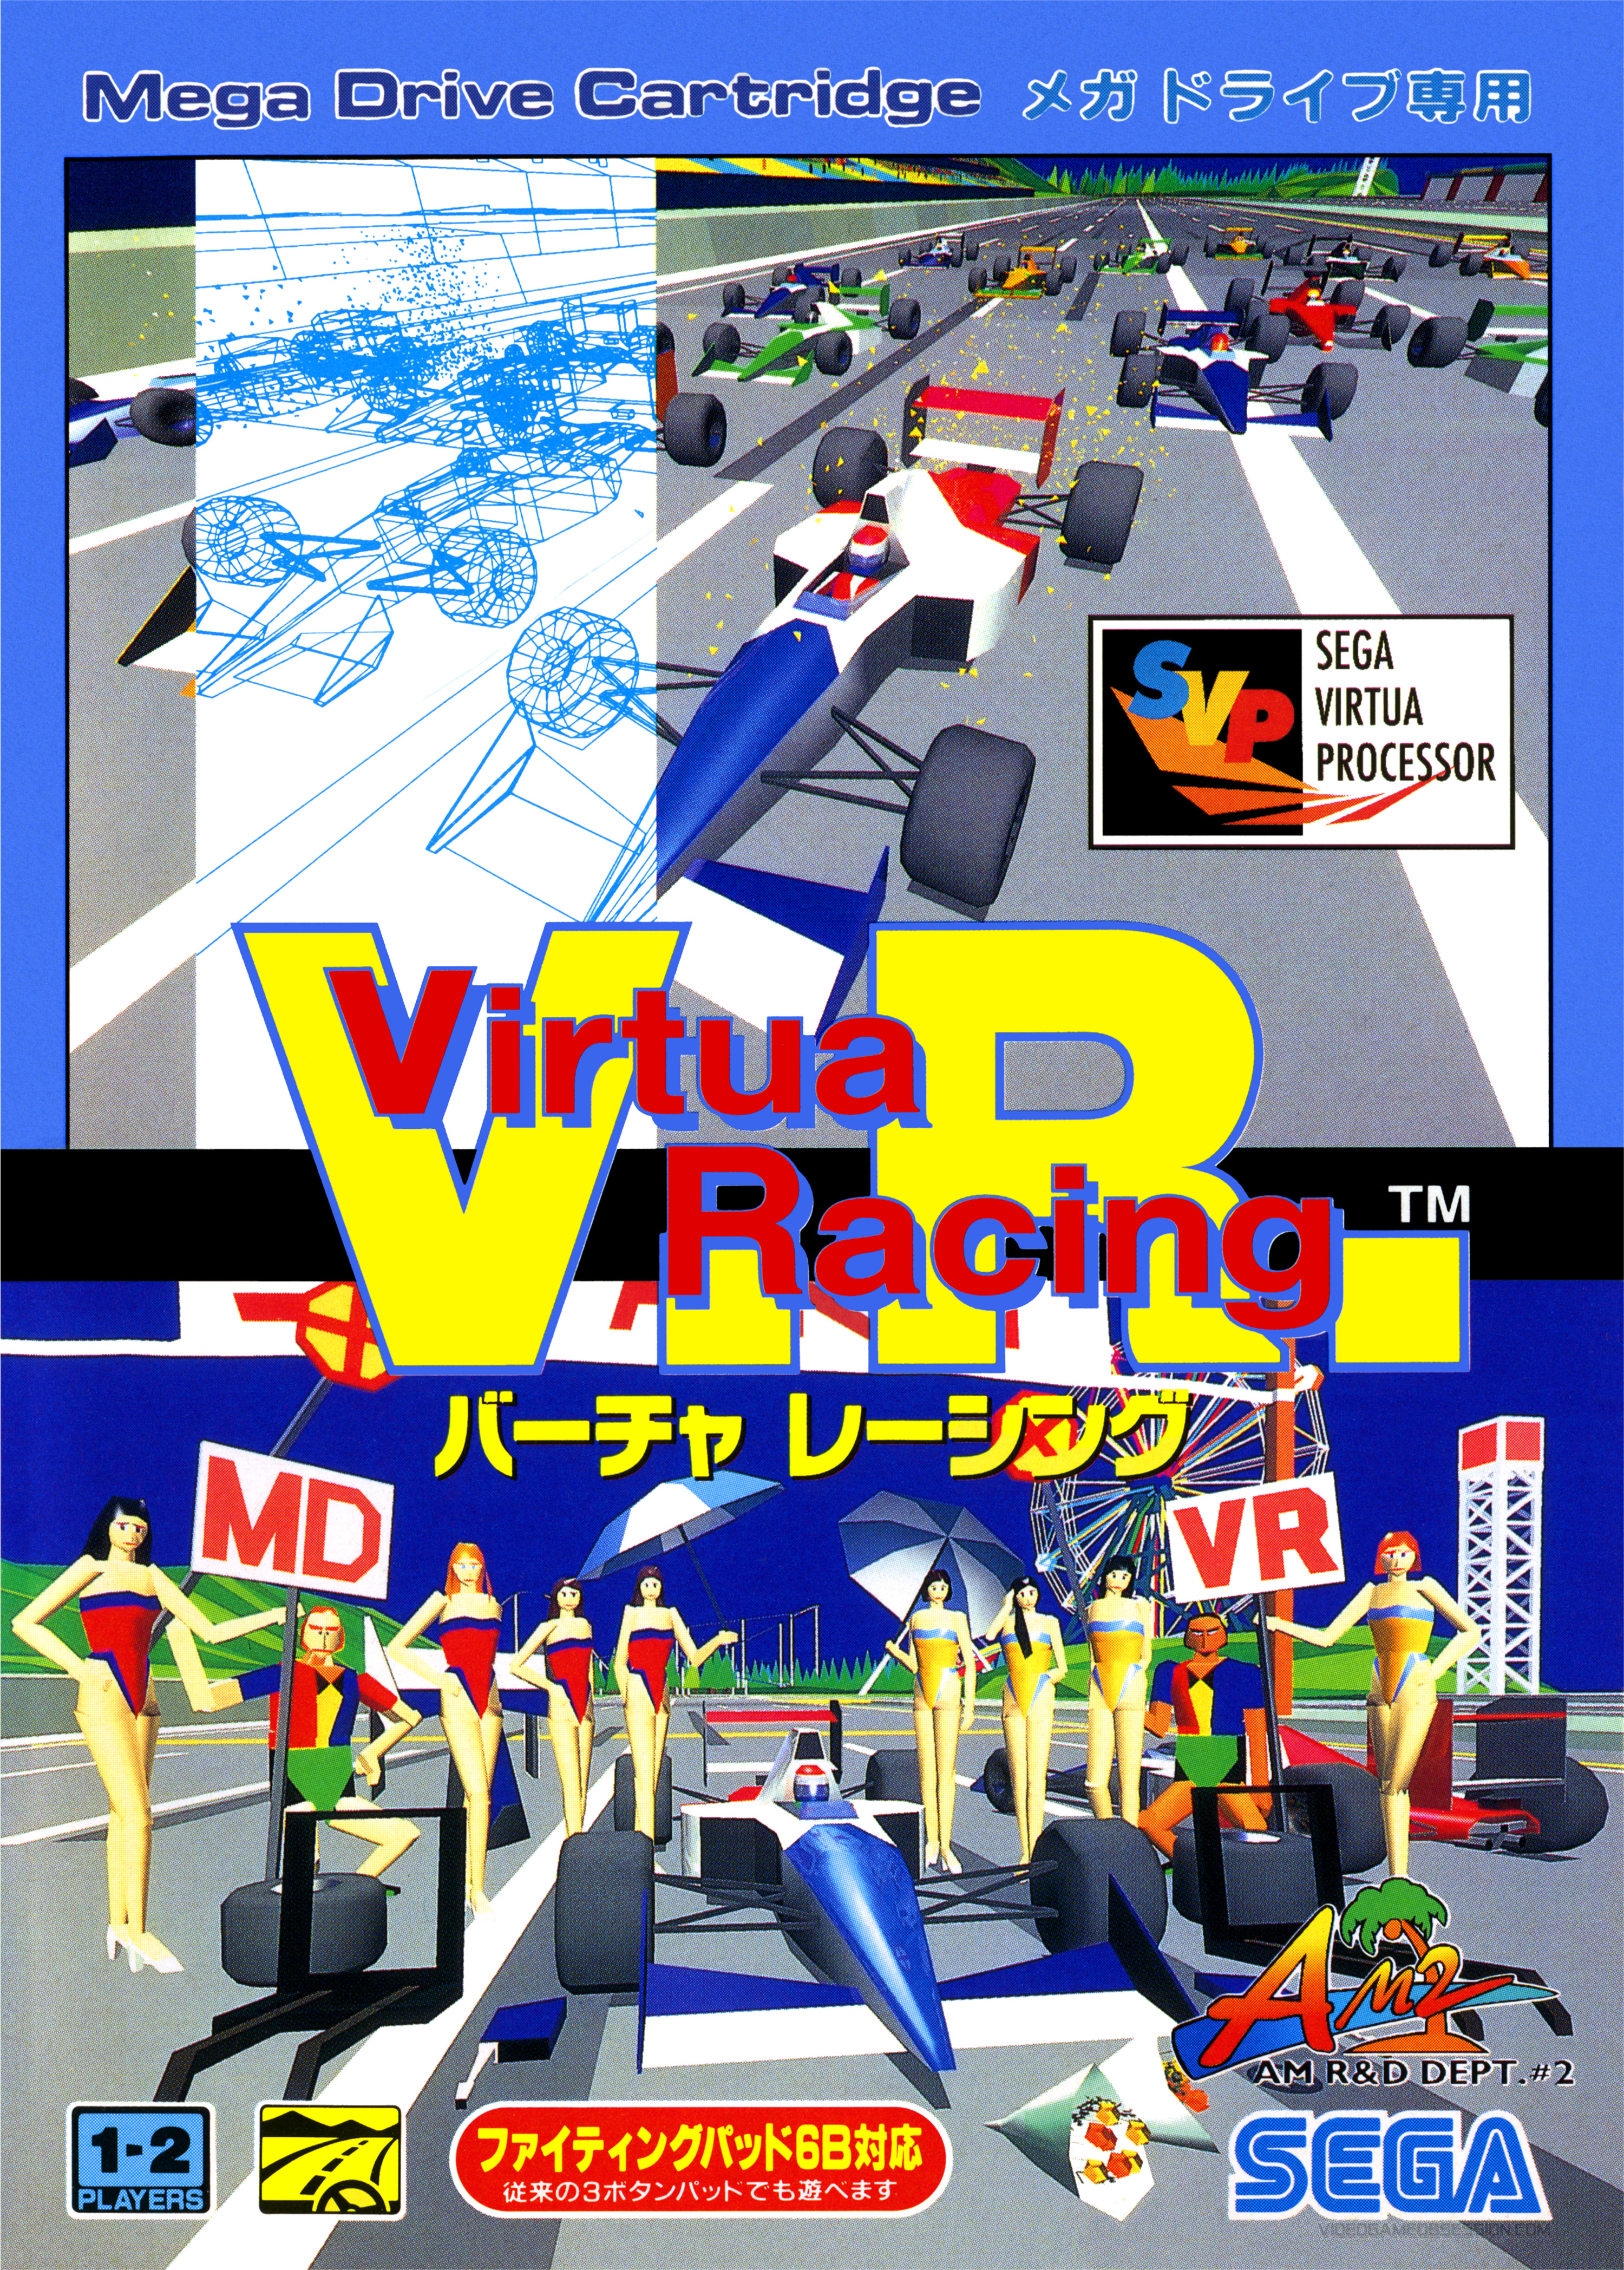 MD-VirtuaRacing-vgo-cover.jpg